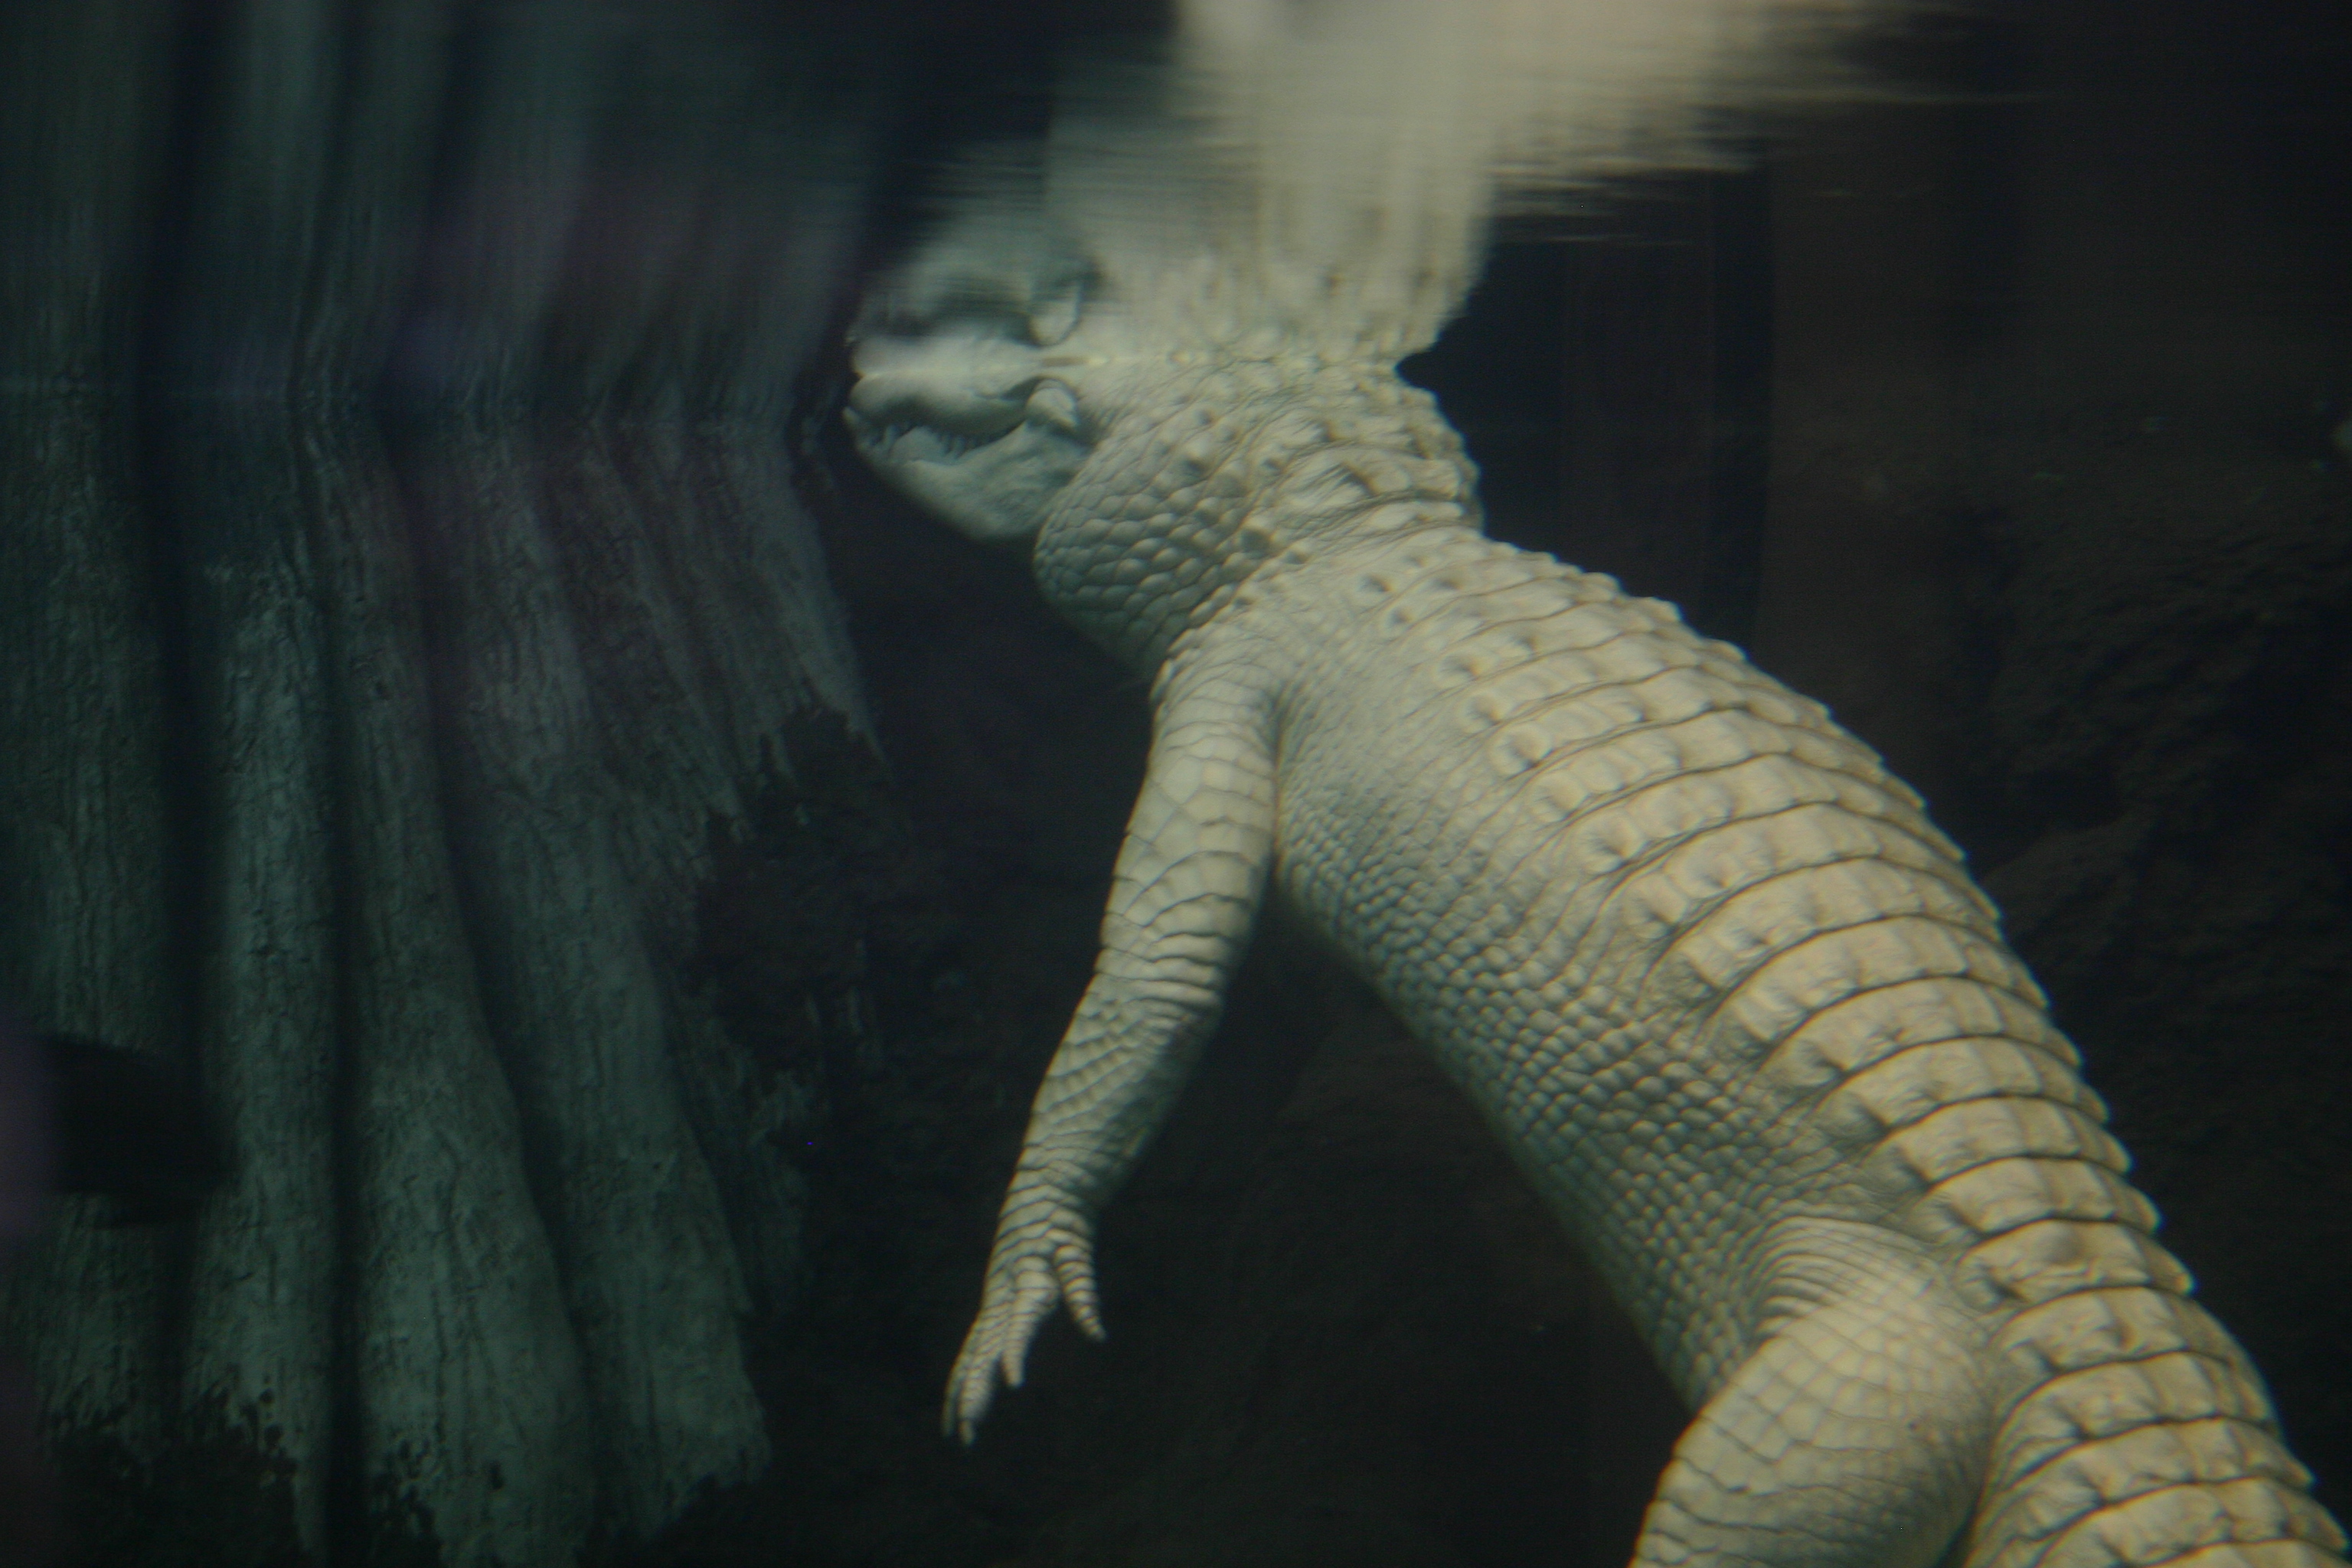 Claude the albino alligator, submerged under water. 